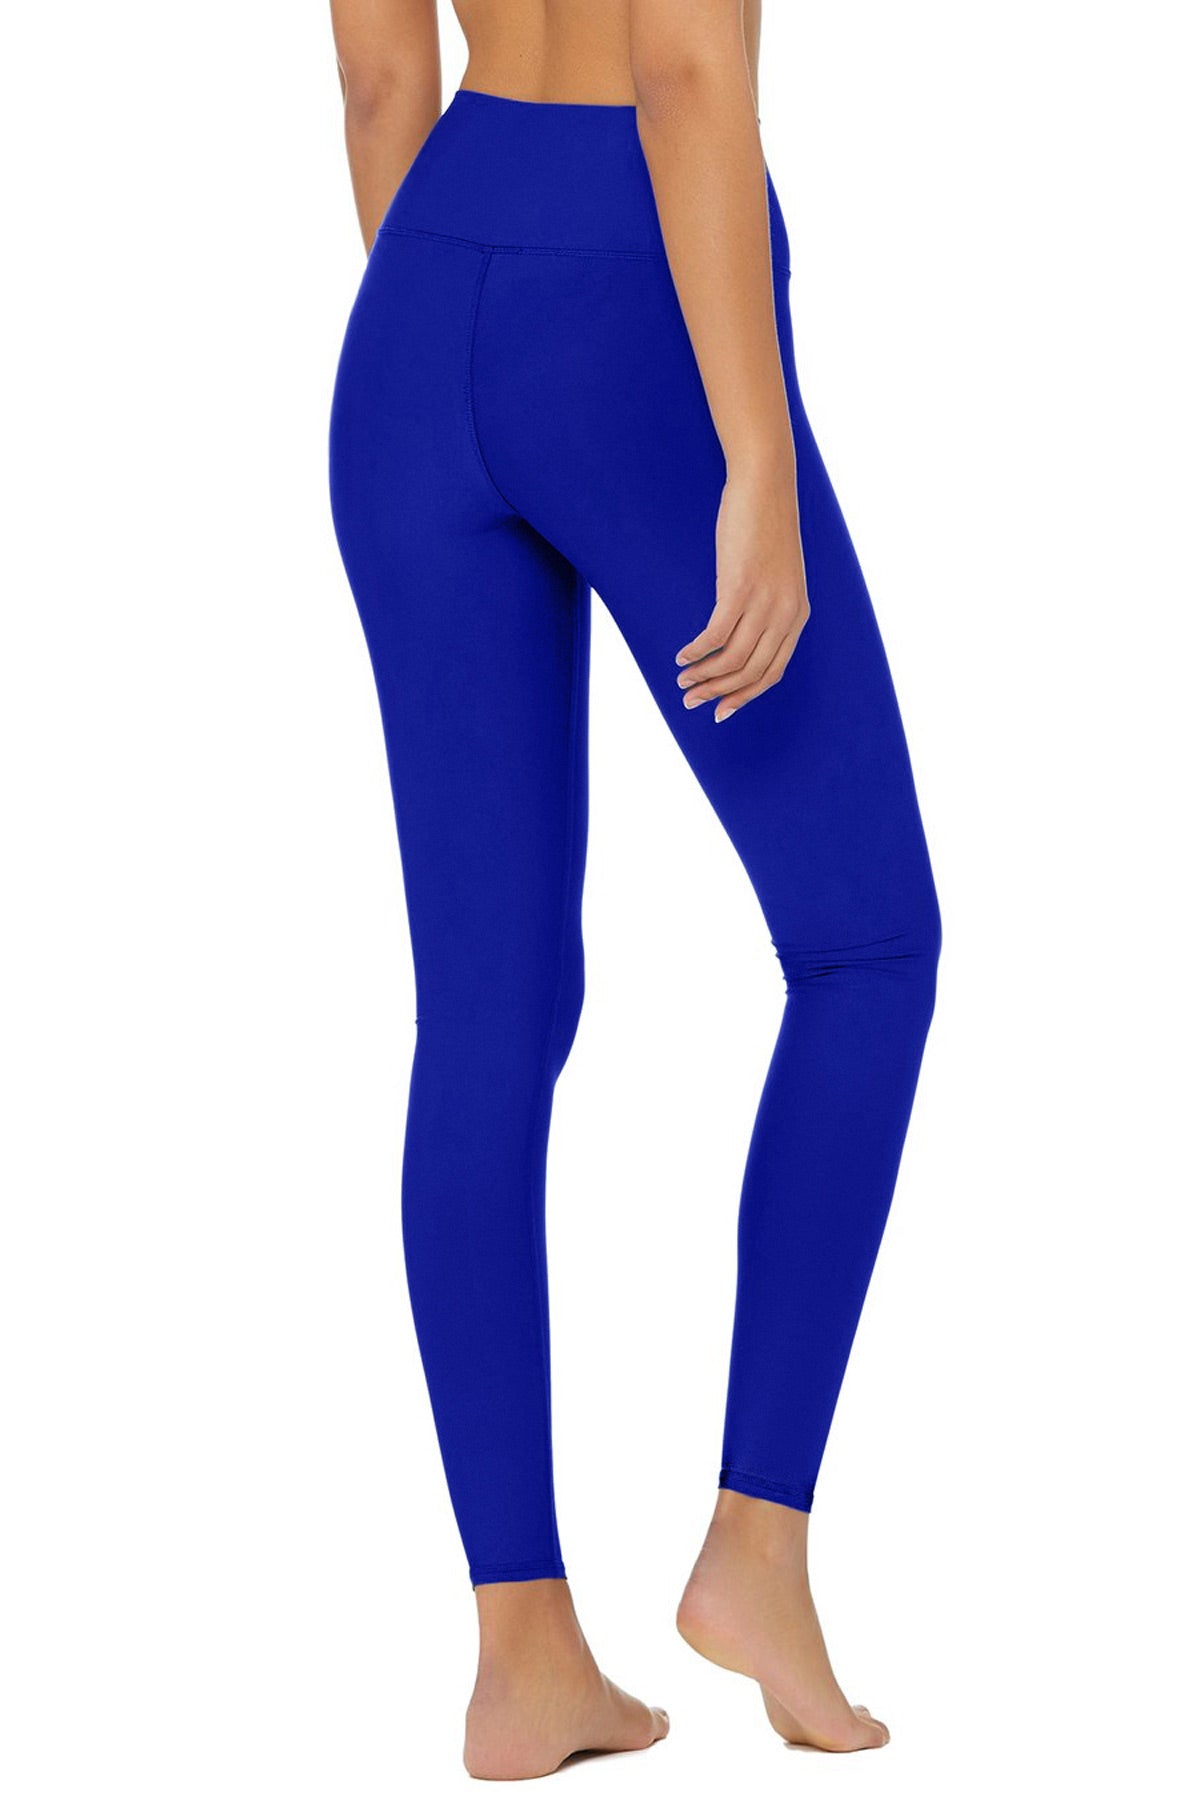 Royal Blue UV 50+ Lucy Vivid Performance Leggings Yoga Pants - Women - Pineapple Clothing